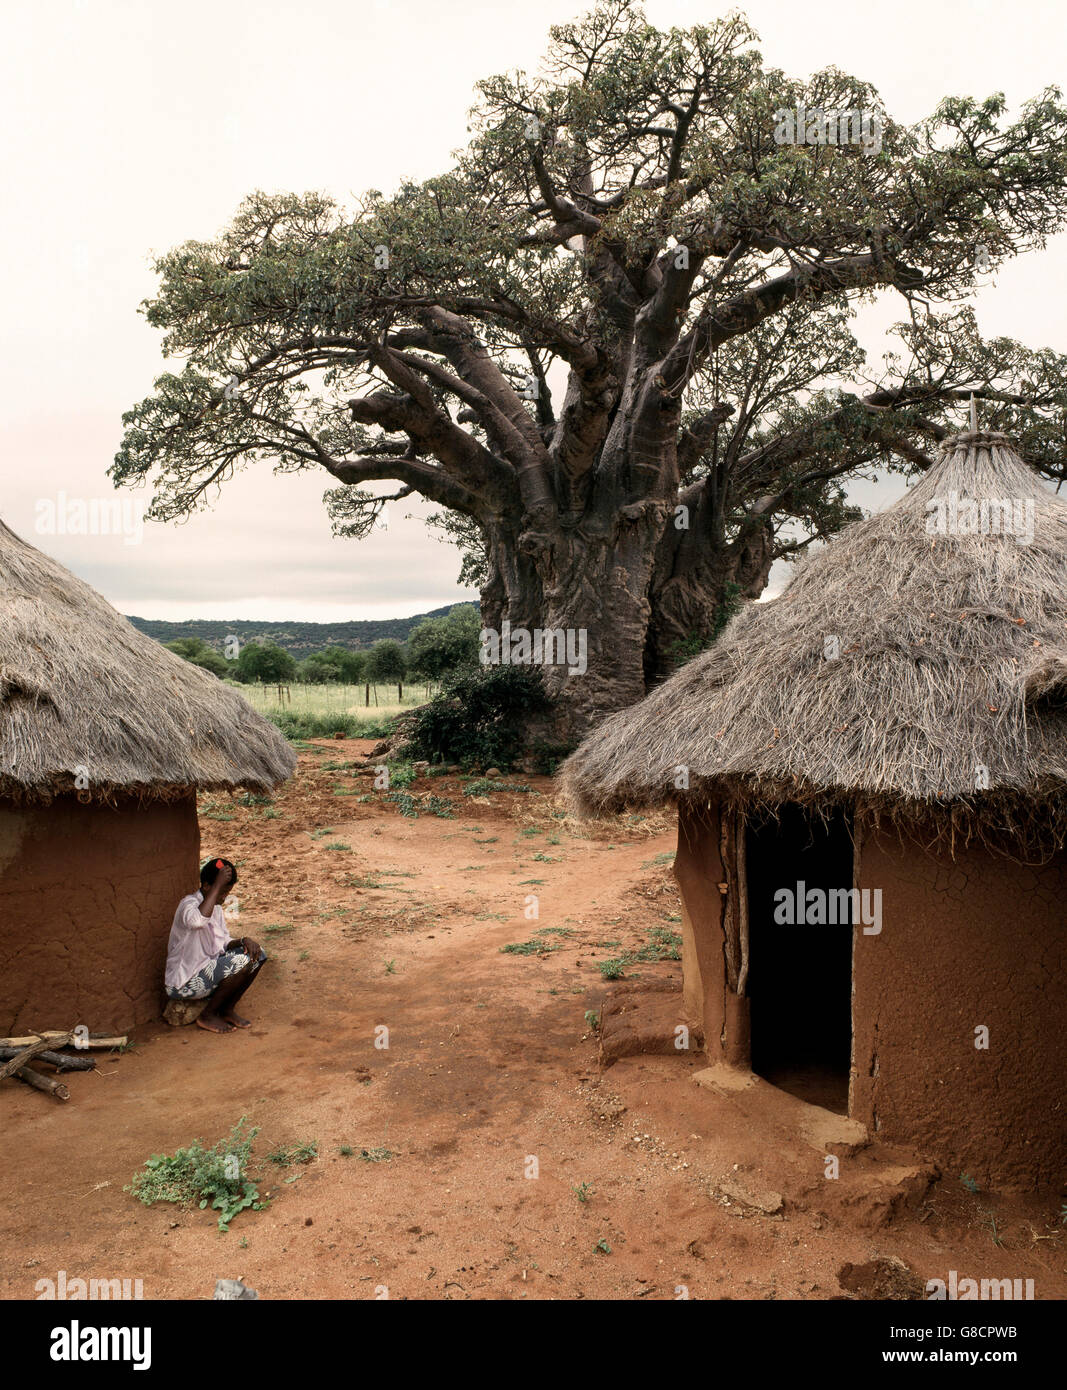 Rural Venda huts, South Africa, Art. Stock Photo